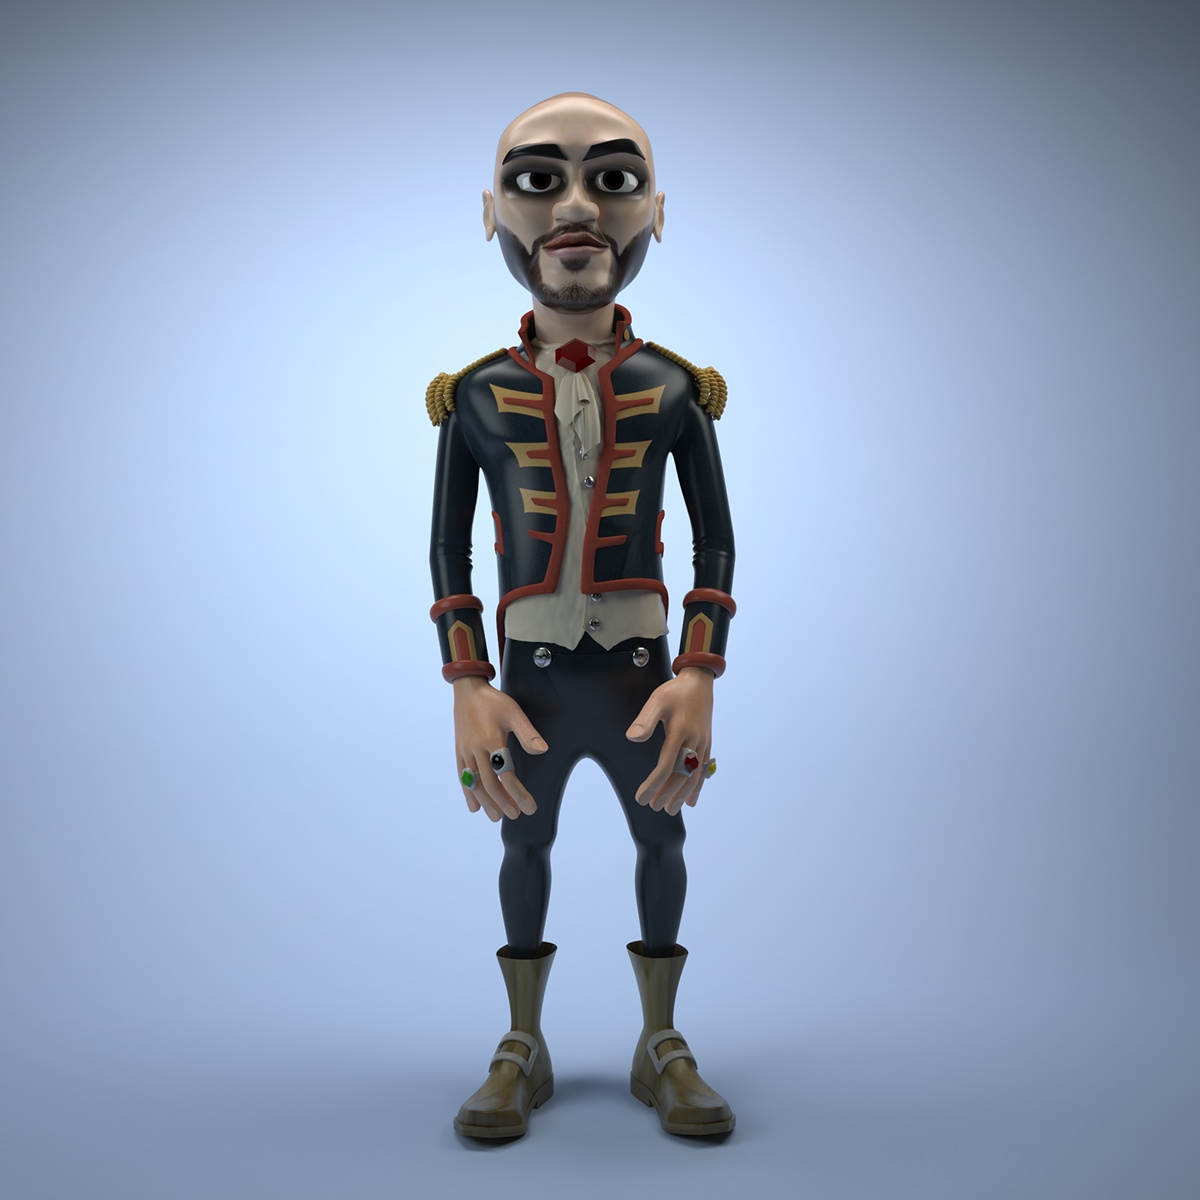 toy design characters Italy italian Negramaro Almossawi dekovic Fun cute cool anatomy 3D pirate caveman